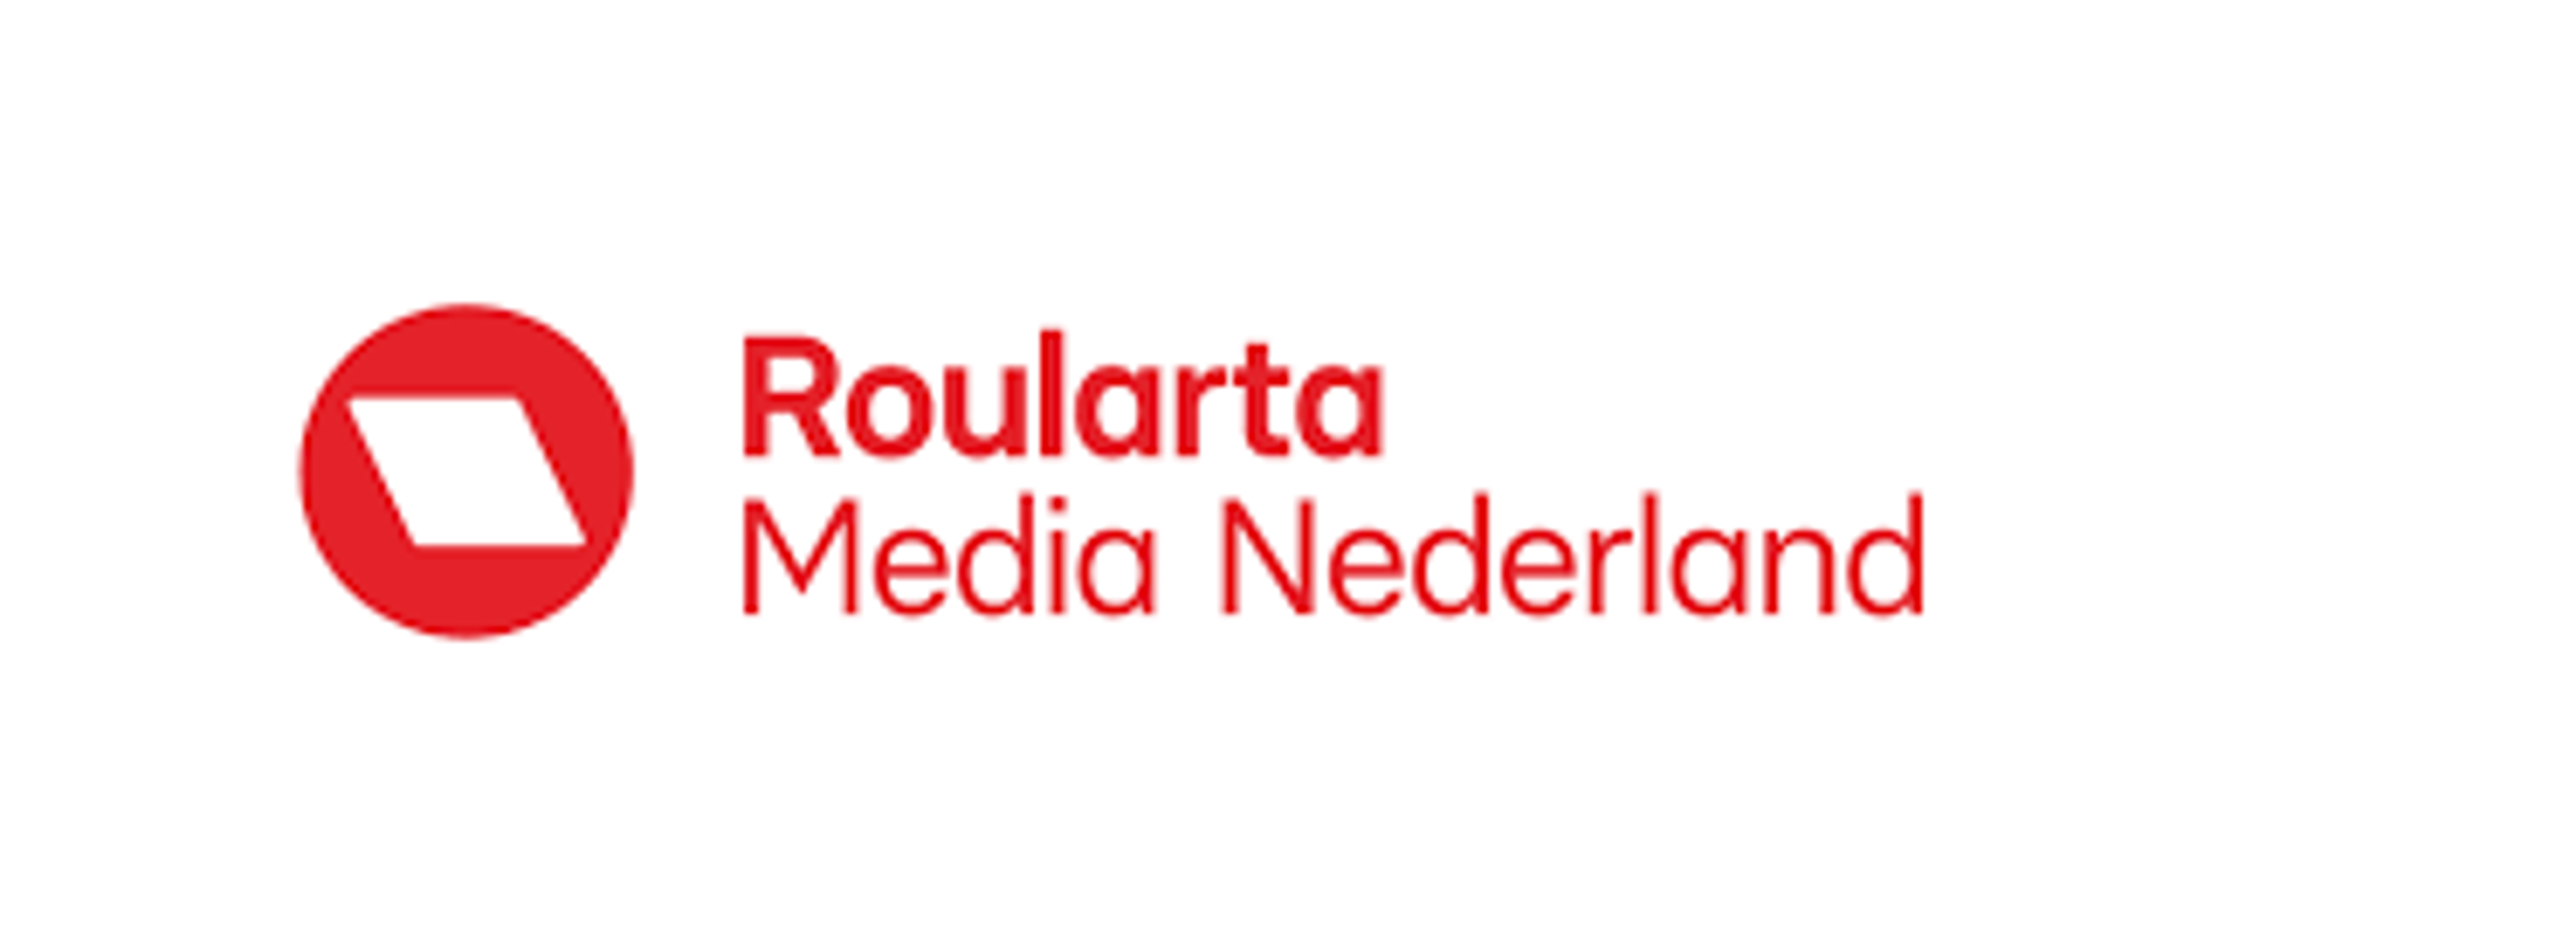 Roularta Media Nederland en New Skool Media worden geïntegreerd